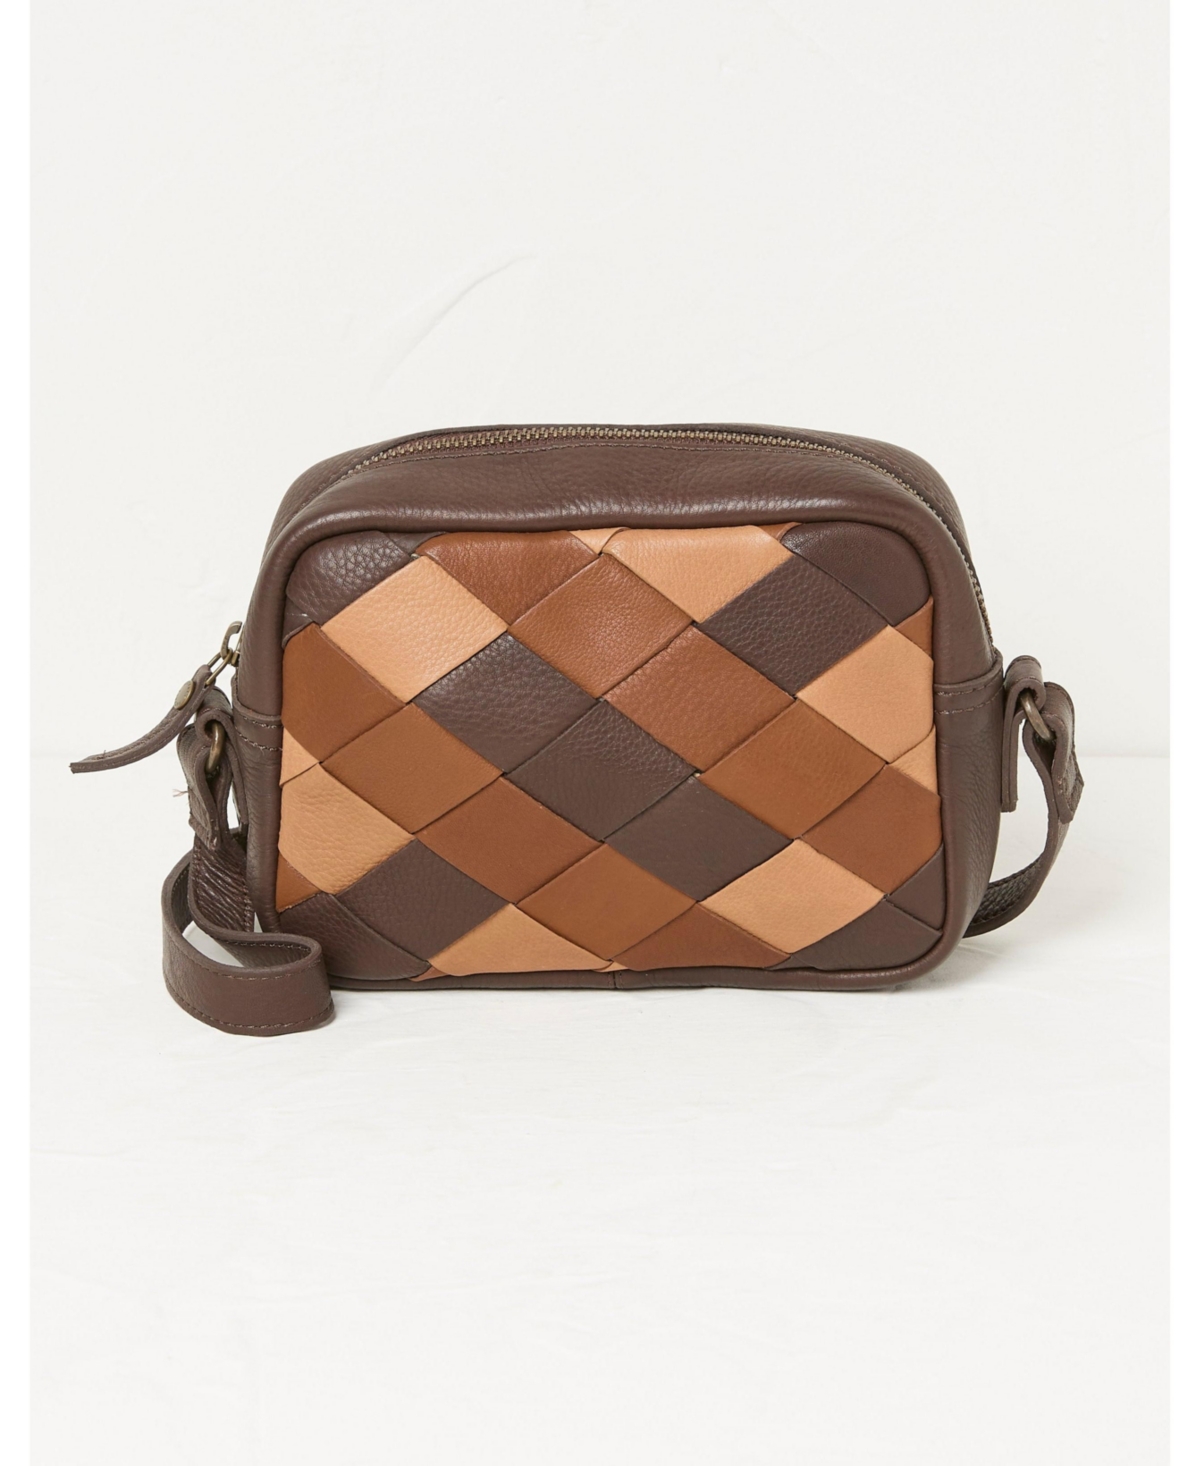 The Venice Weave Crossbody Bag - Chocolate brown